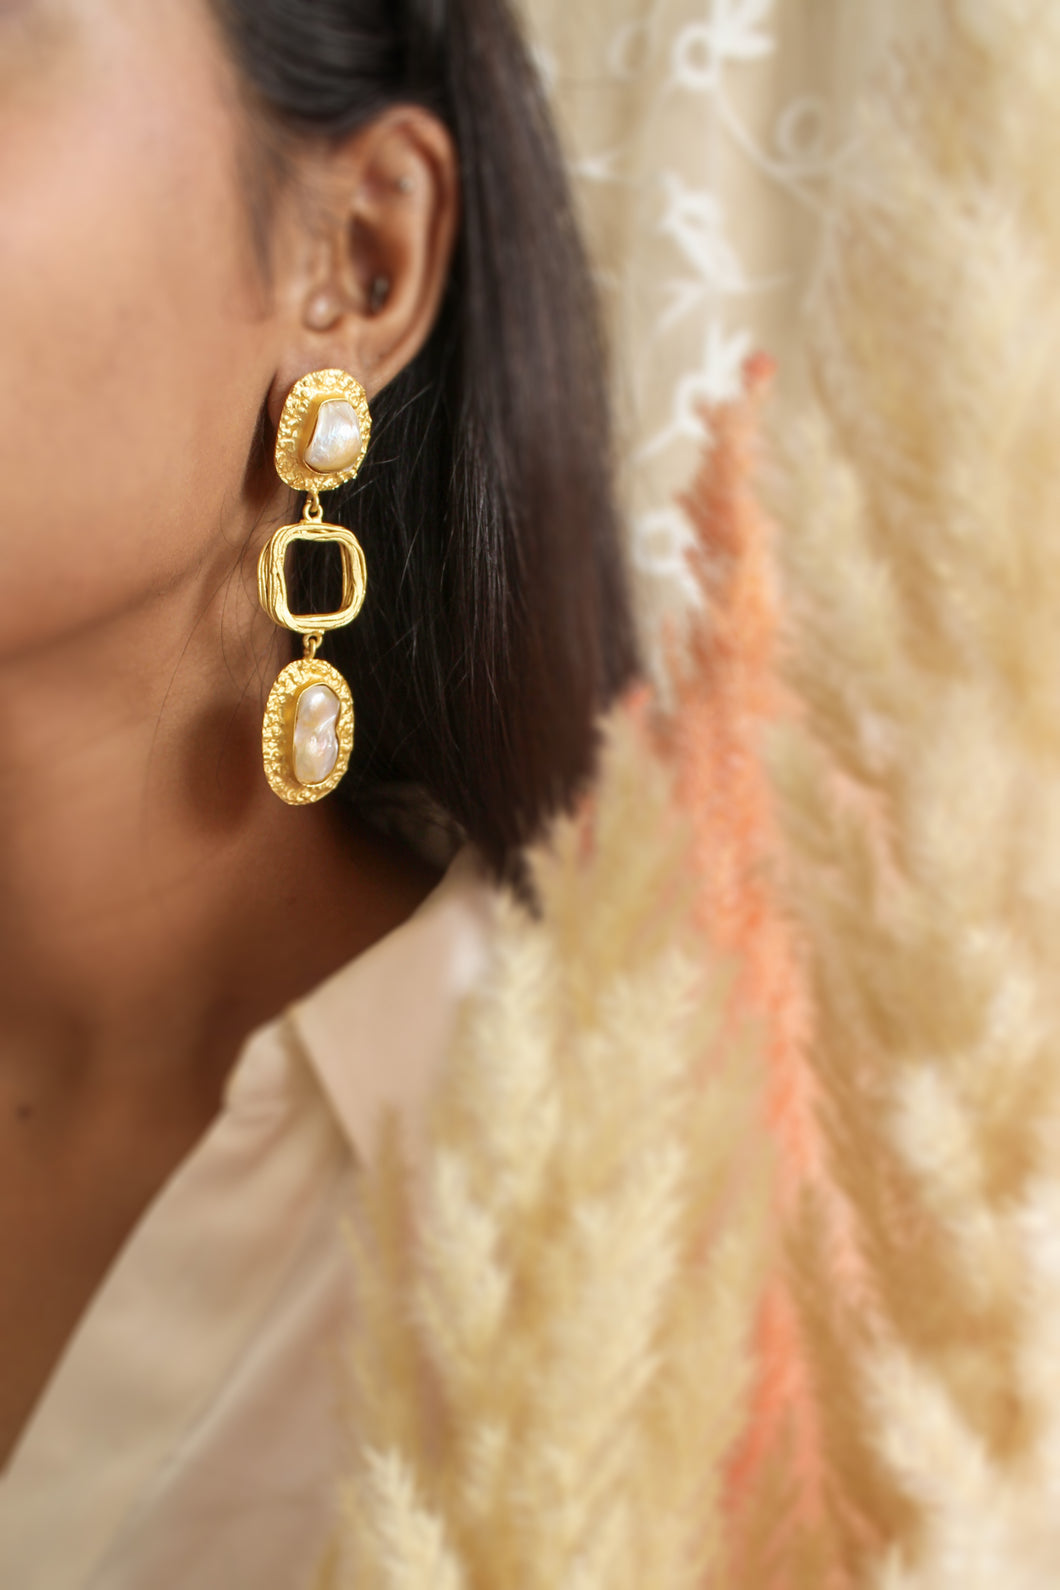 The Baroque Pearl Earrings